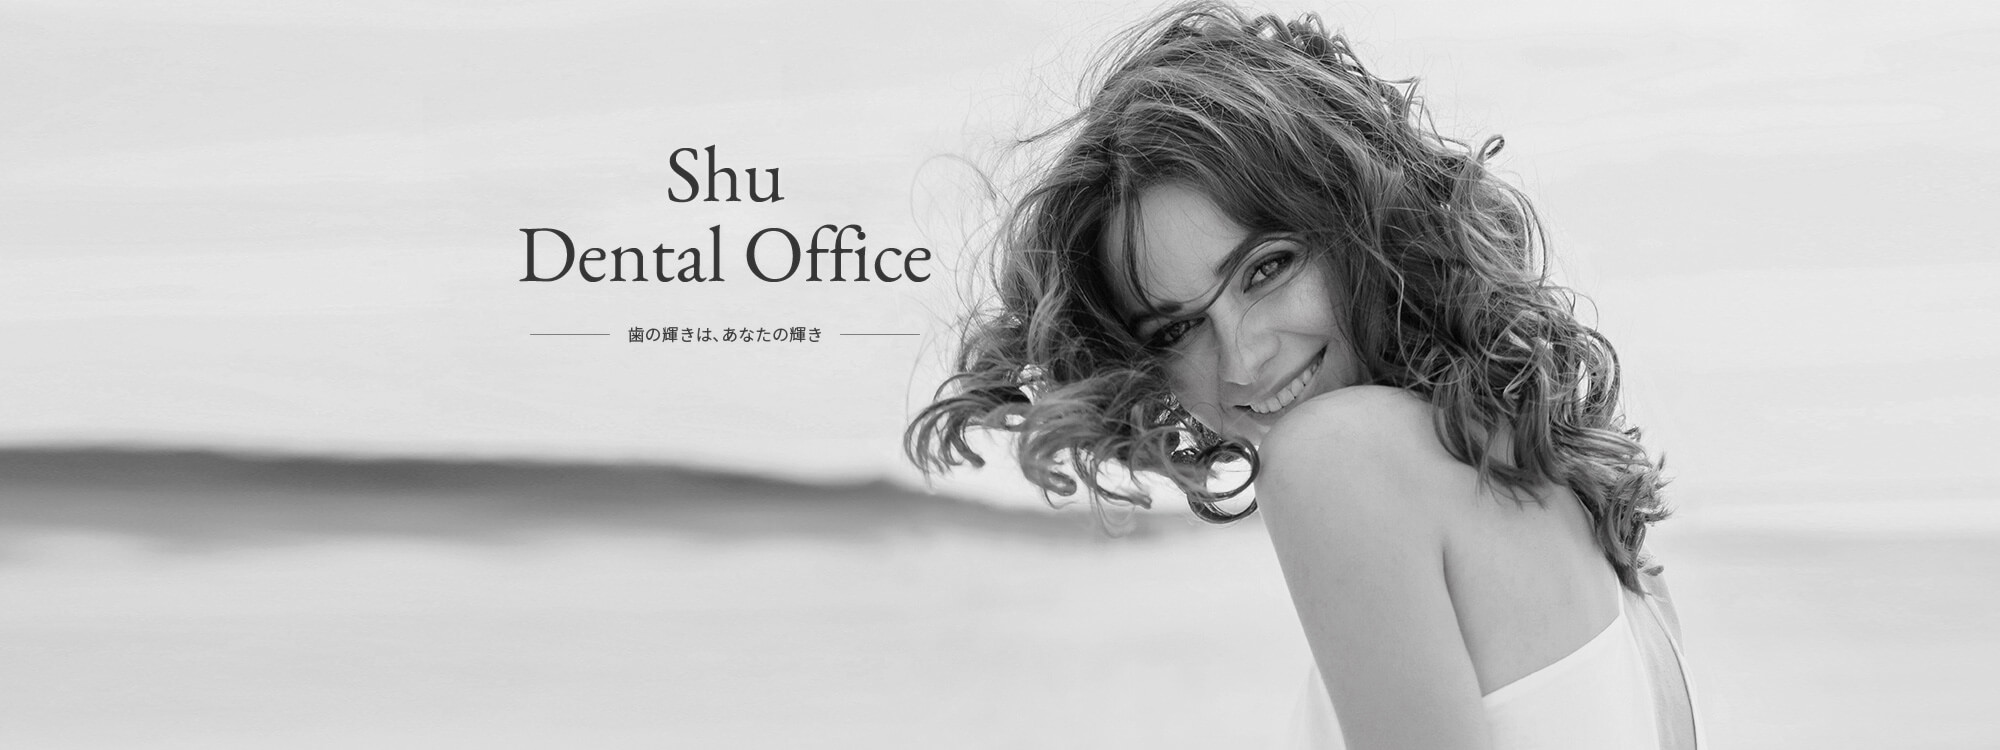 Shu Dental Office 歯の輝きは､あなたの輝き